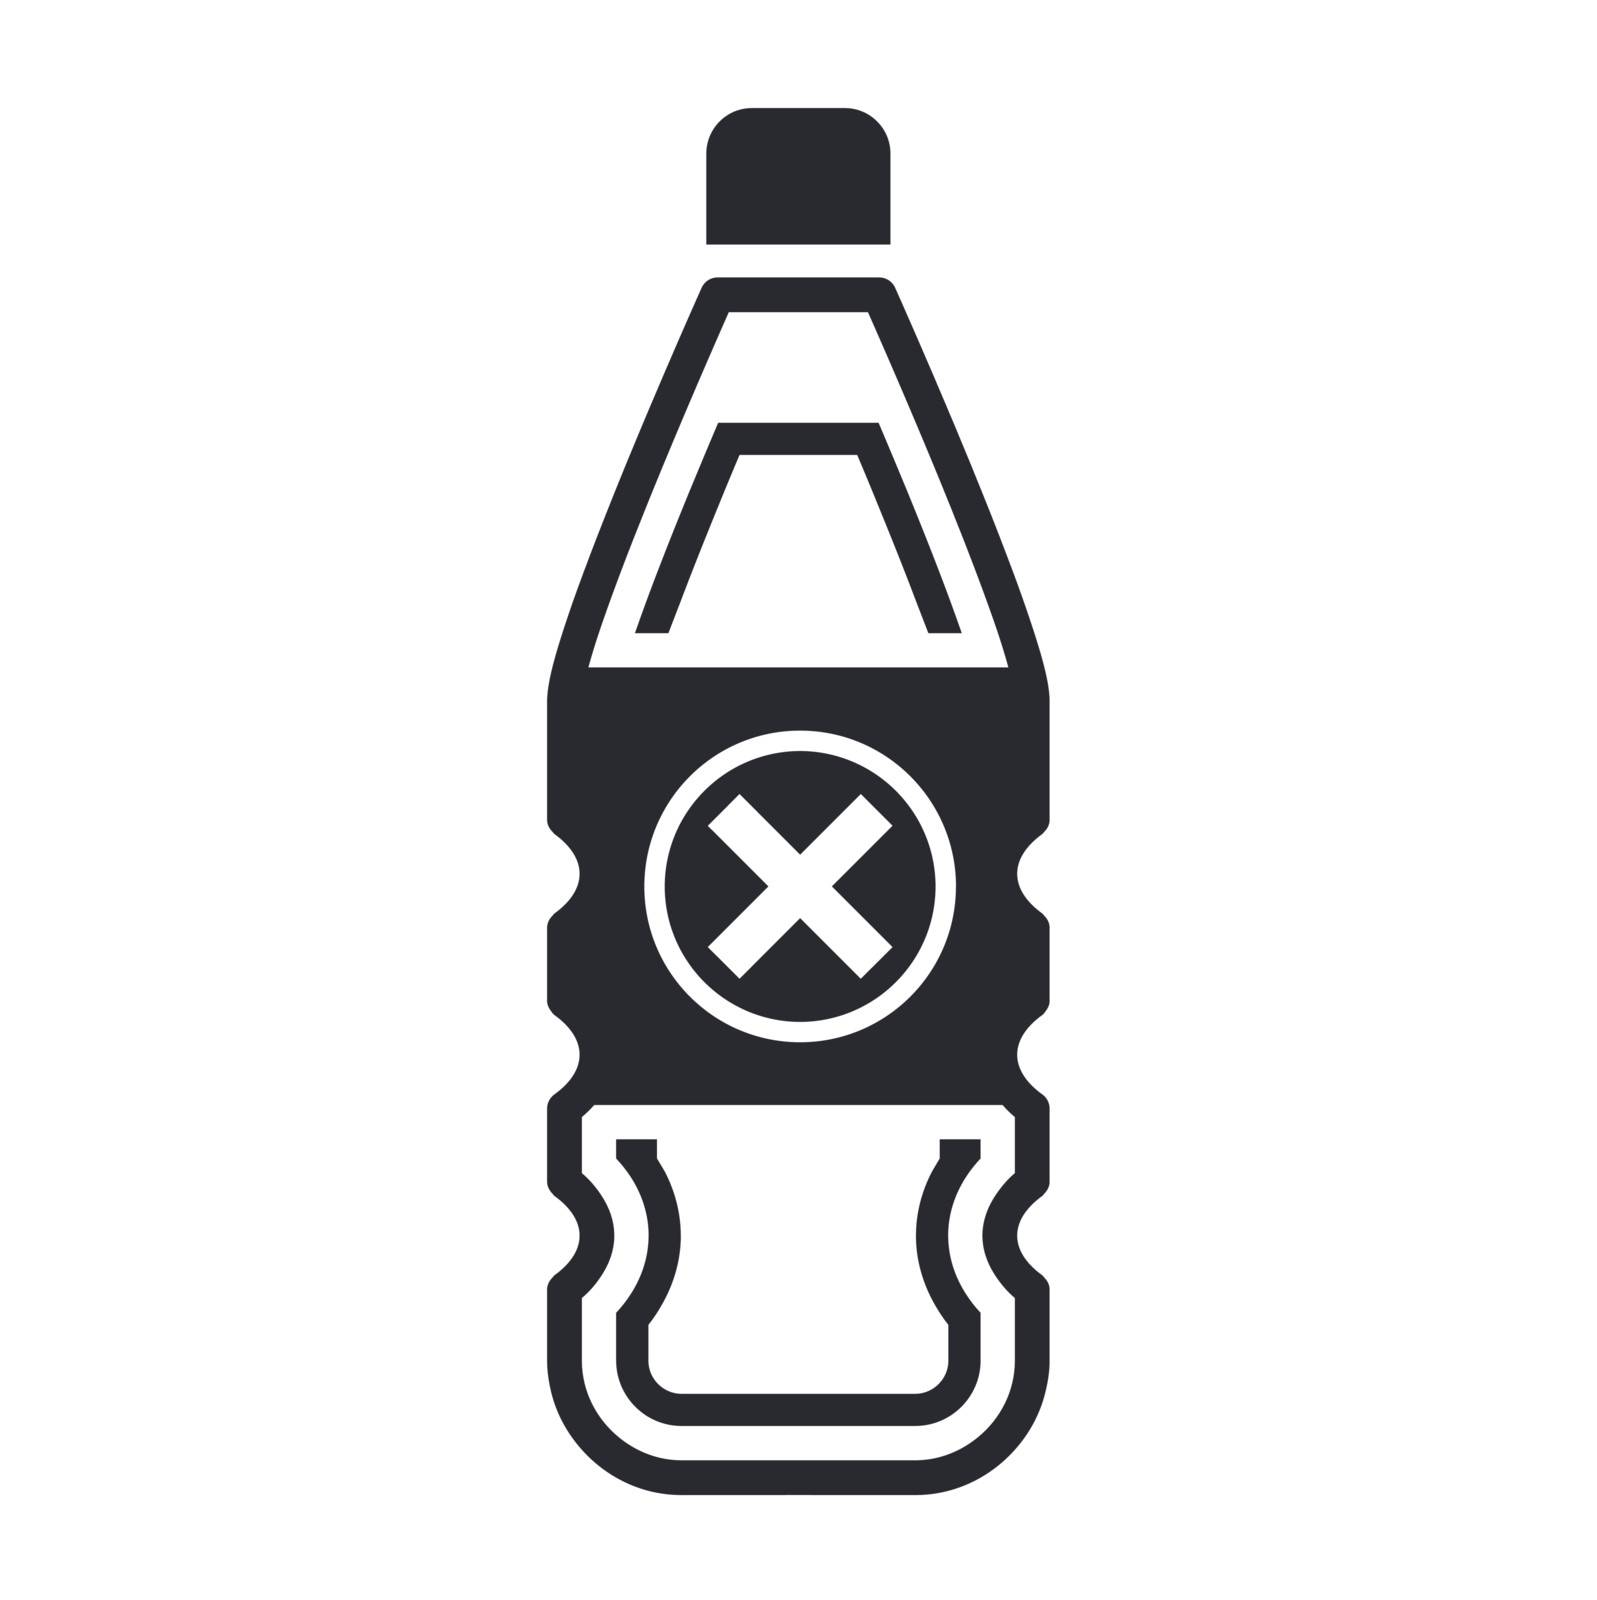 Vector illustration of dangerous bottle by myVector